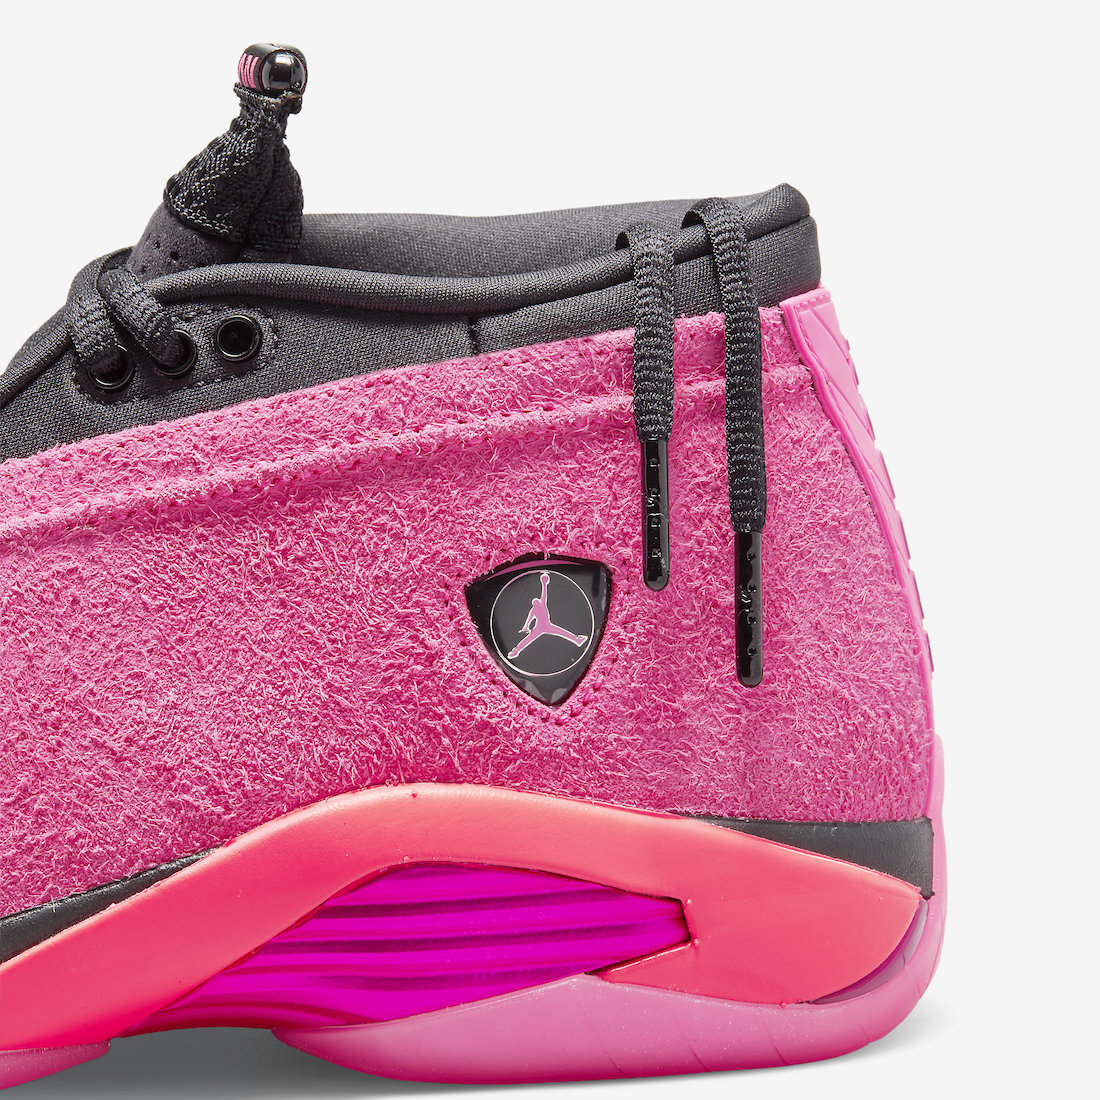 Air Jordan 14 Low Shocking Pink Blast DH4121-600 Release Date